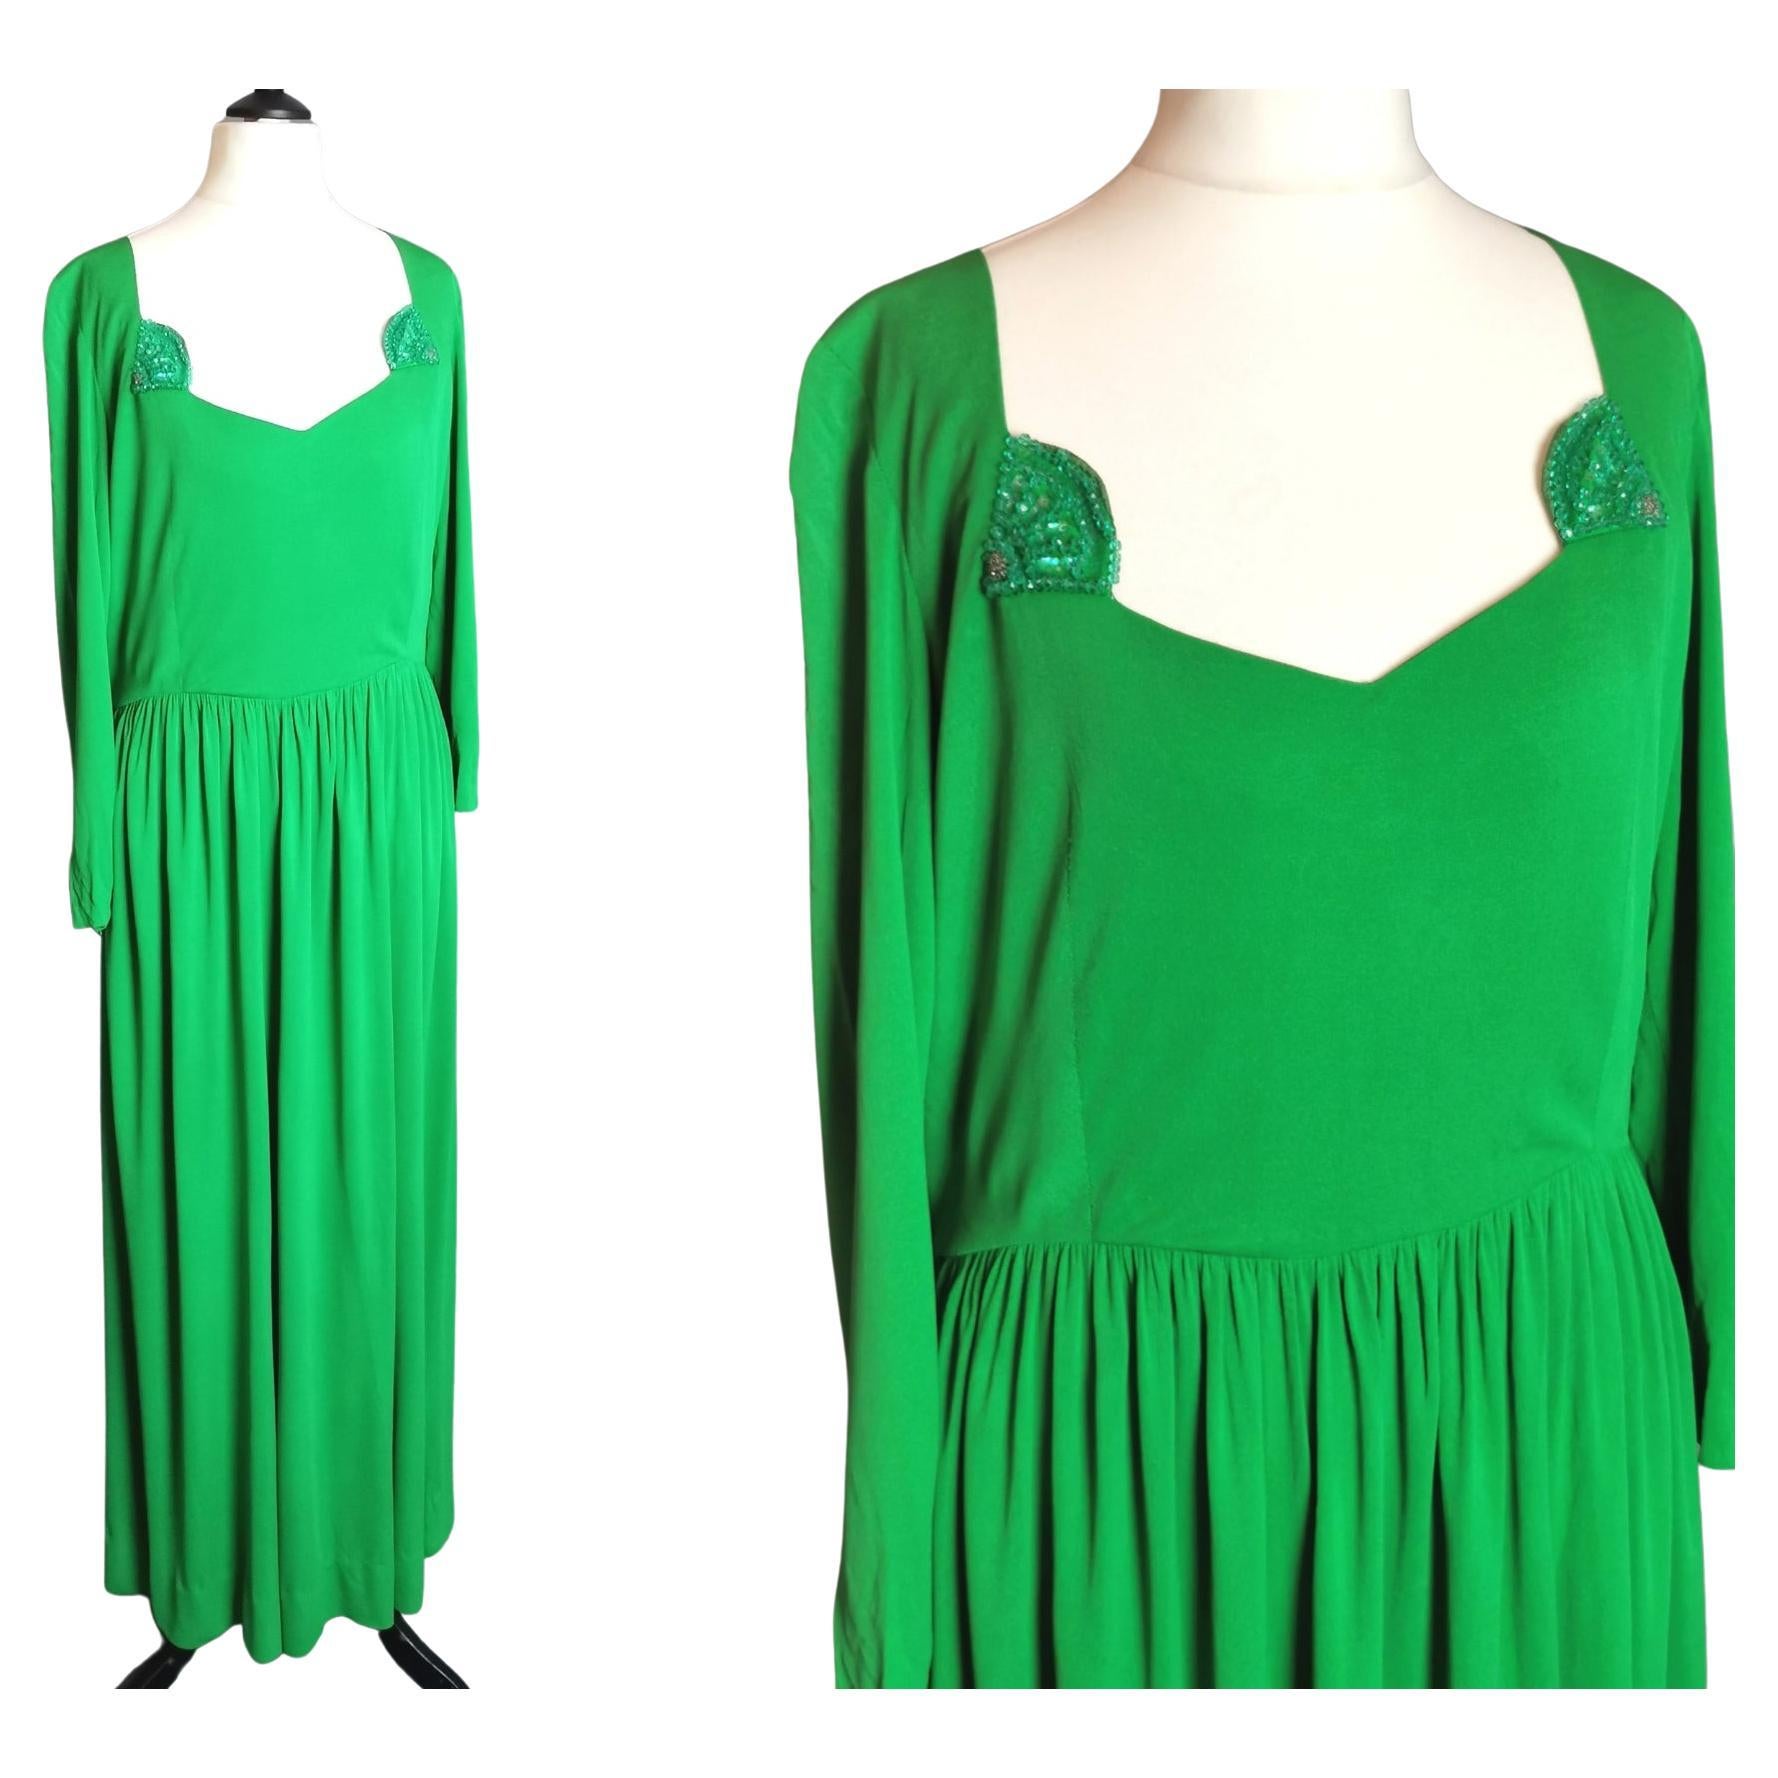 Vintage 1960s cocktail dress, emerald green